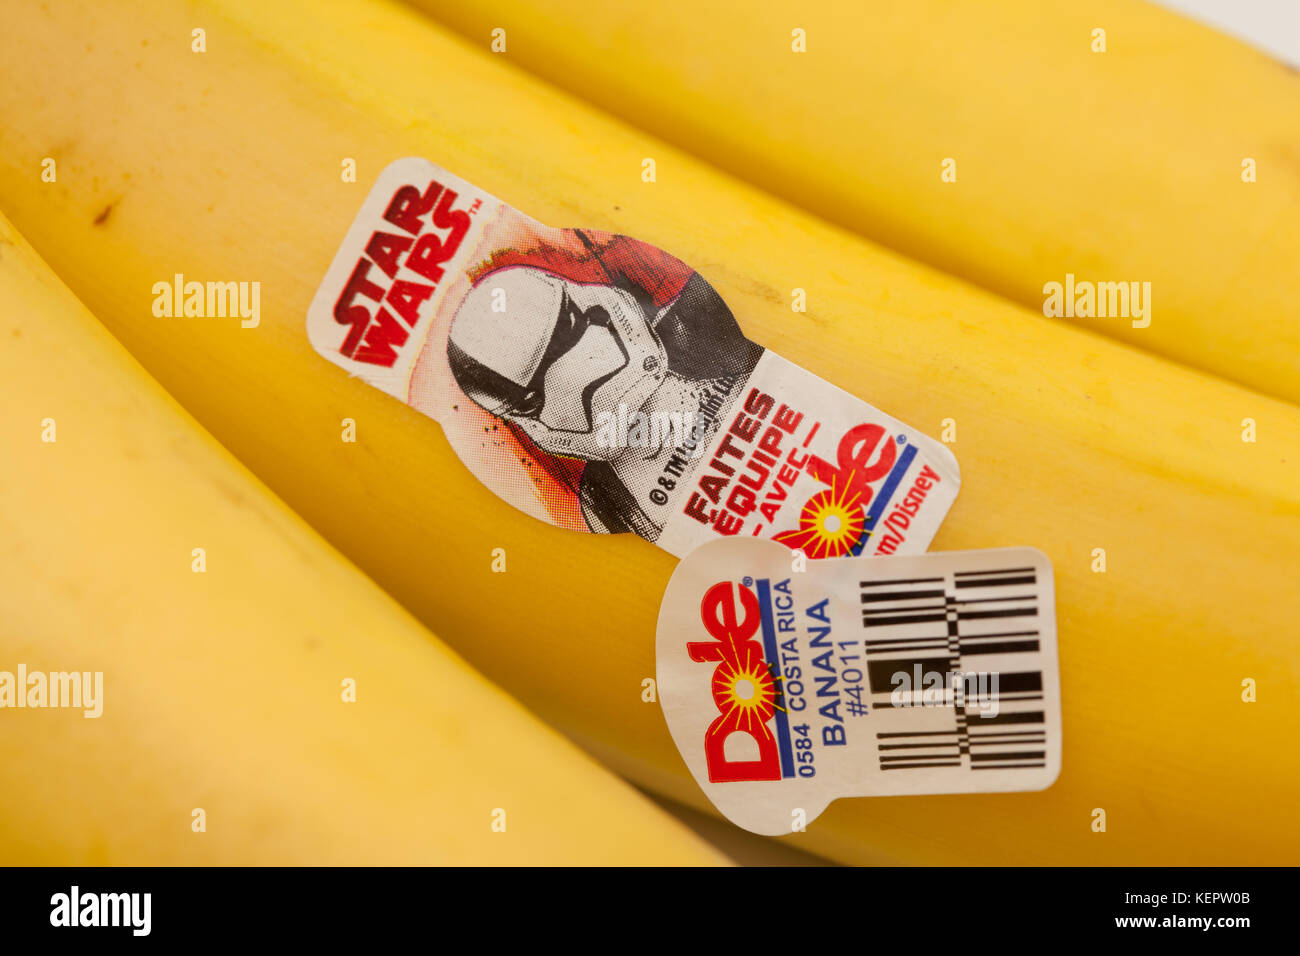 Toronto, Canada - 22 octobre 2017 : Star Wars stormtrooper autocollant sur bananes Dole Banque D'Images